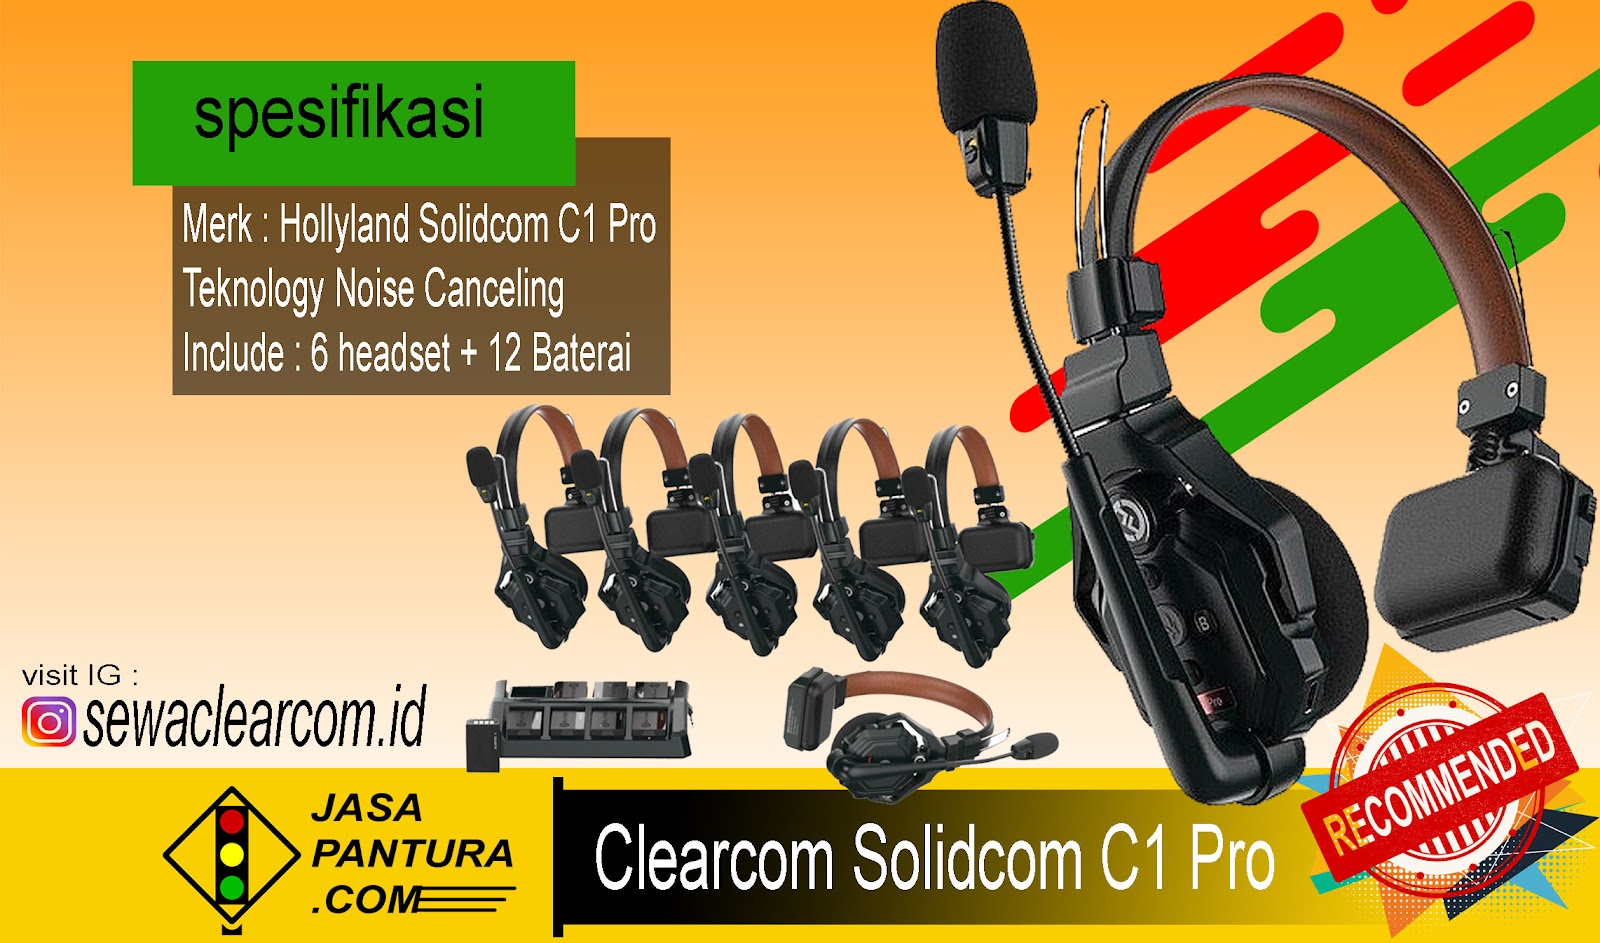 Sewa Clearcom / Eartec / Solidcom C1 Pro